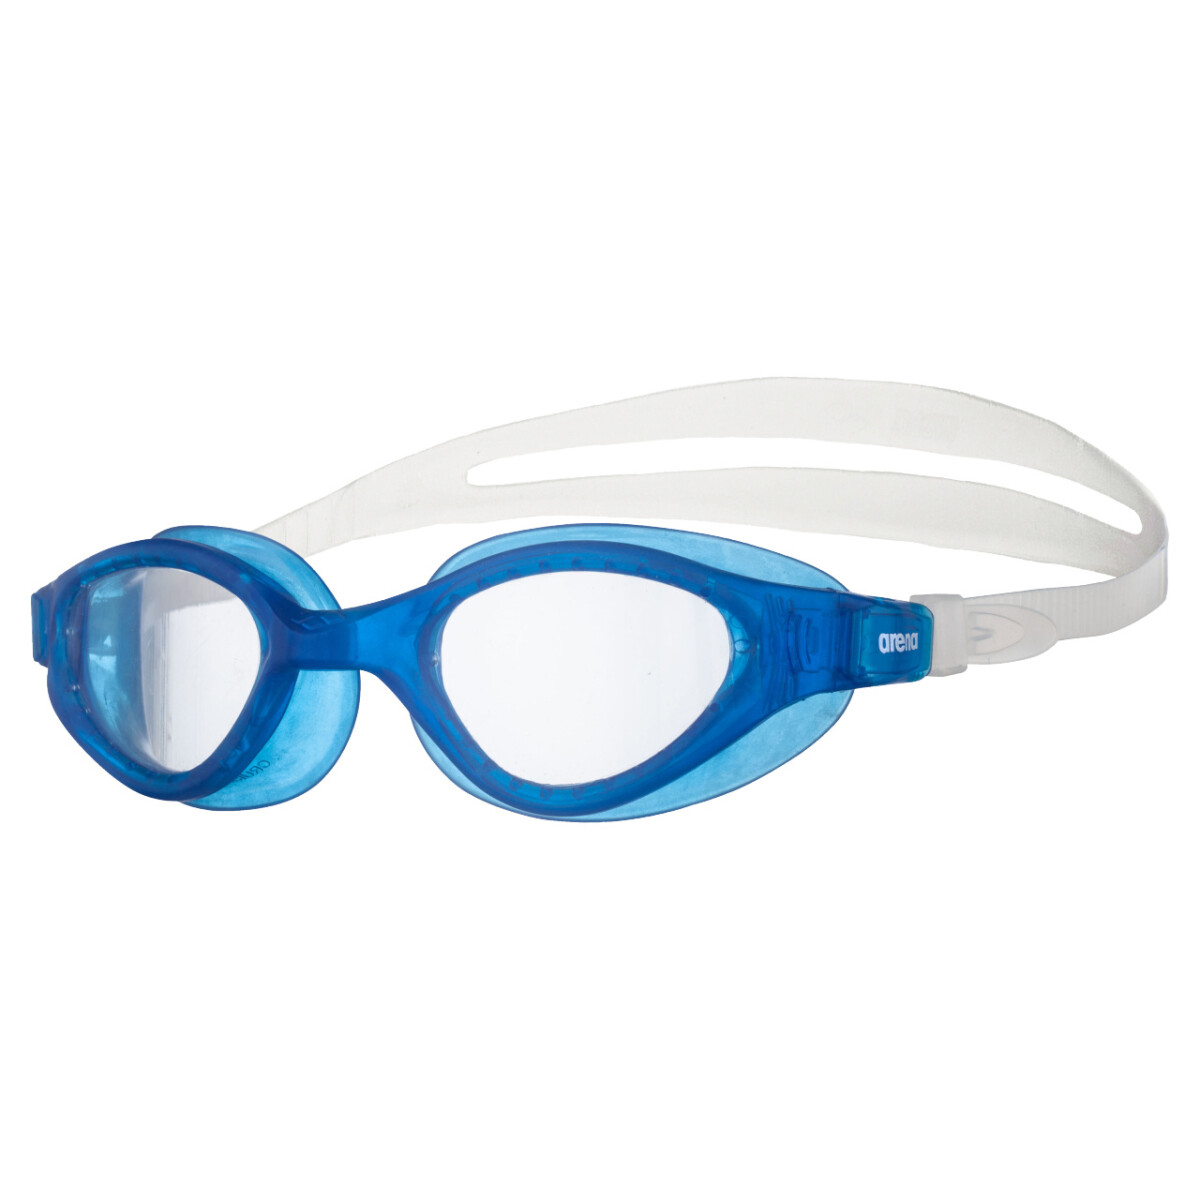 Lentes De Natacion Para Adultos Arena Cruiser Evo Goggles - Azul y Transparente 